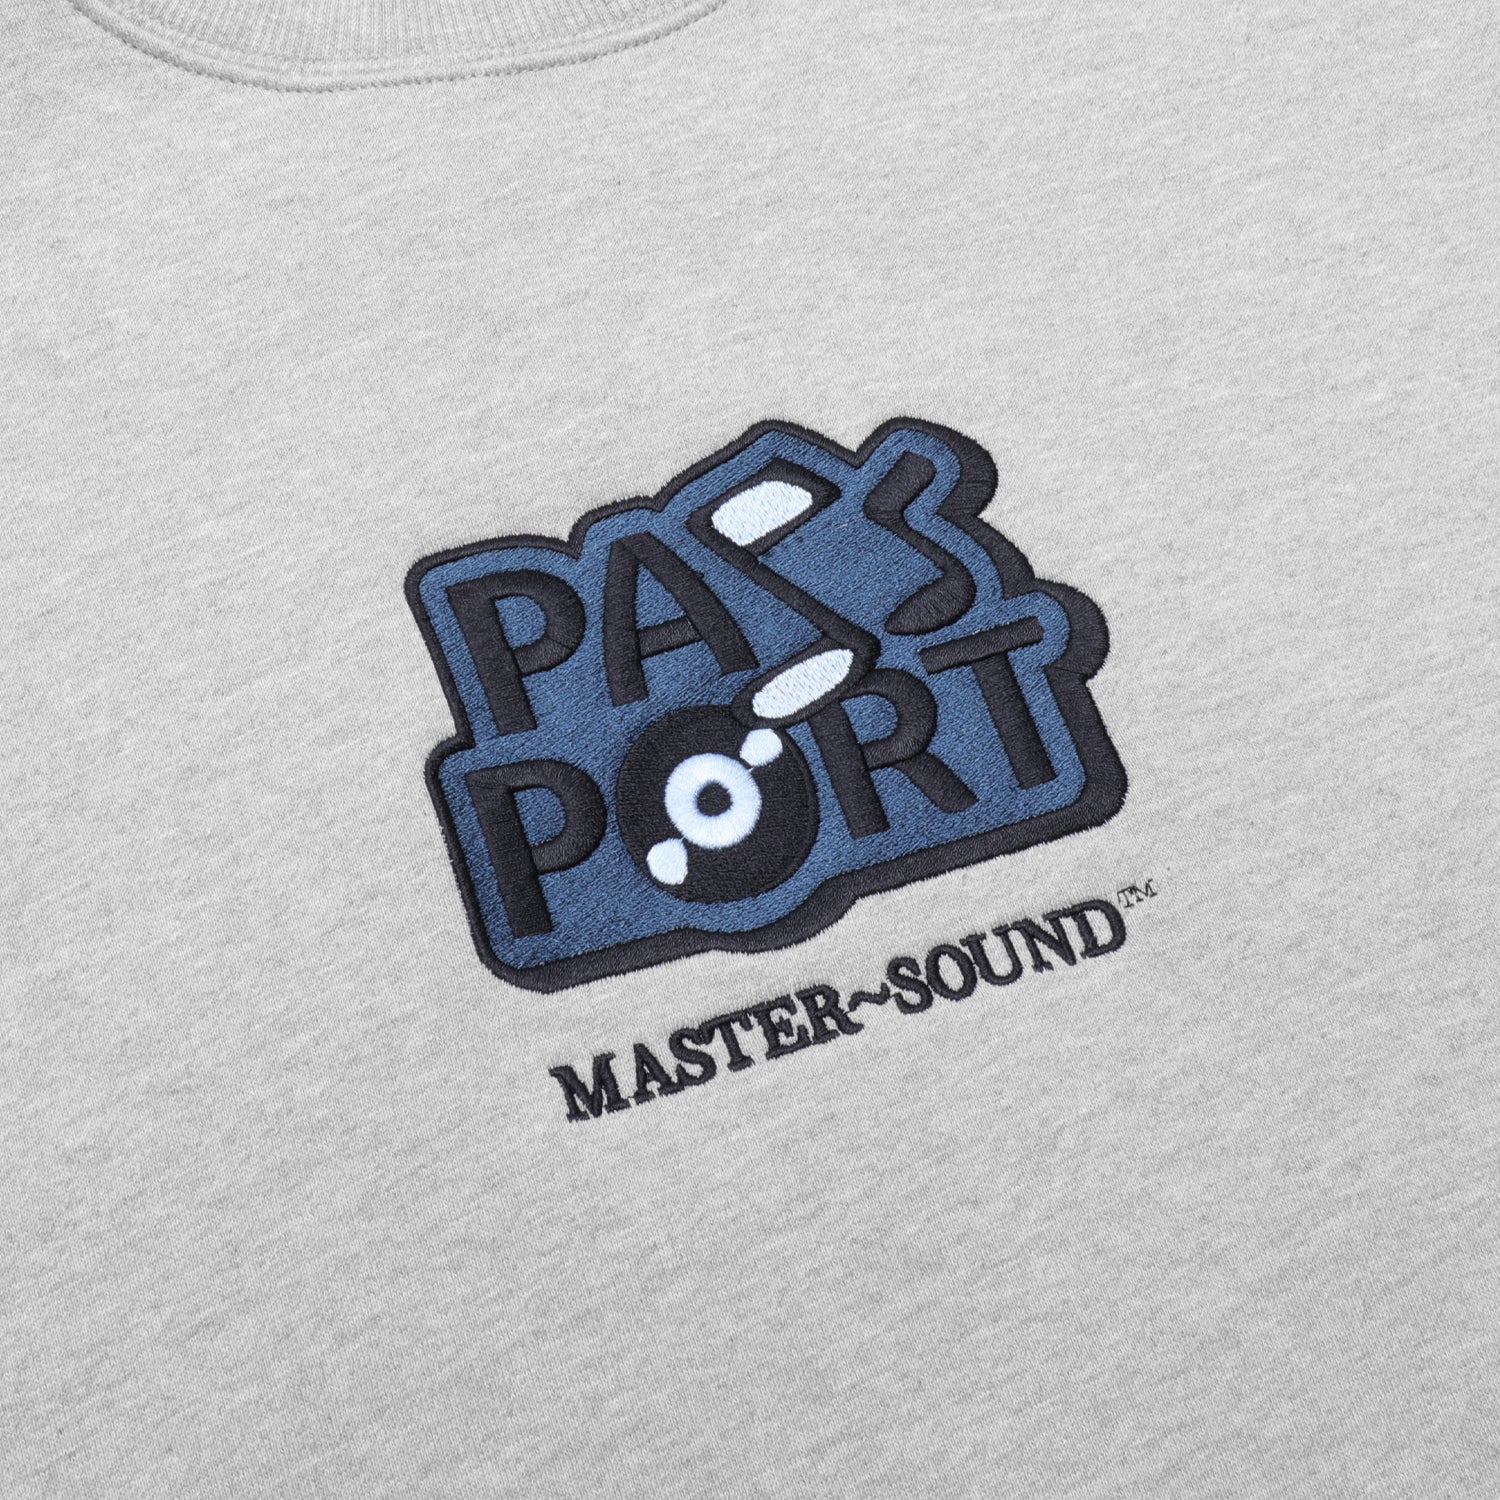 Pass~Port Master~Sounds Sweater - Ash